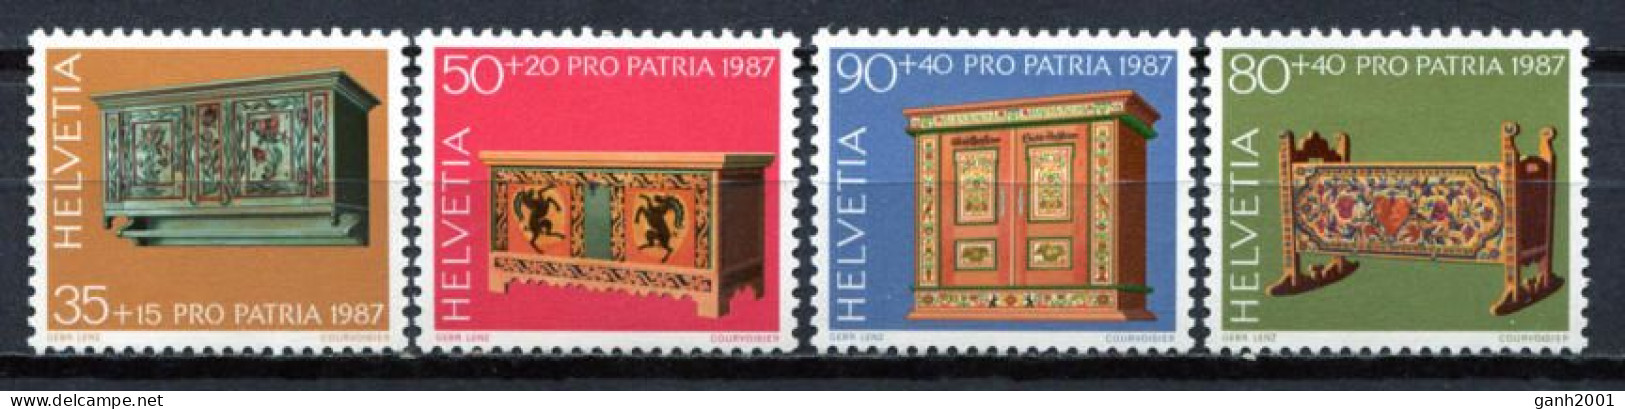 Switzerland 1987 Suiza / Pro Patria Furniture MNH Muebles / Jc22  34-5 - Unused Stamps